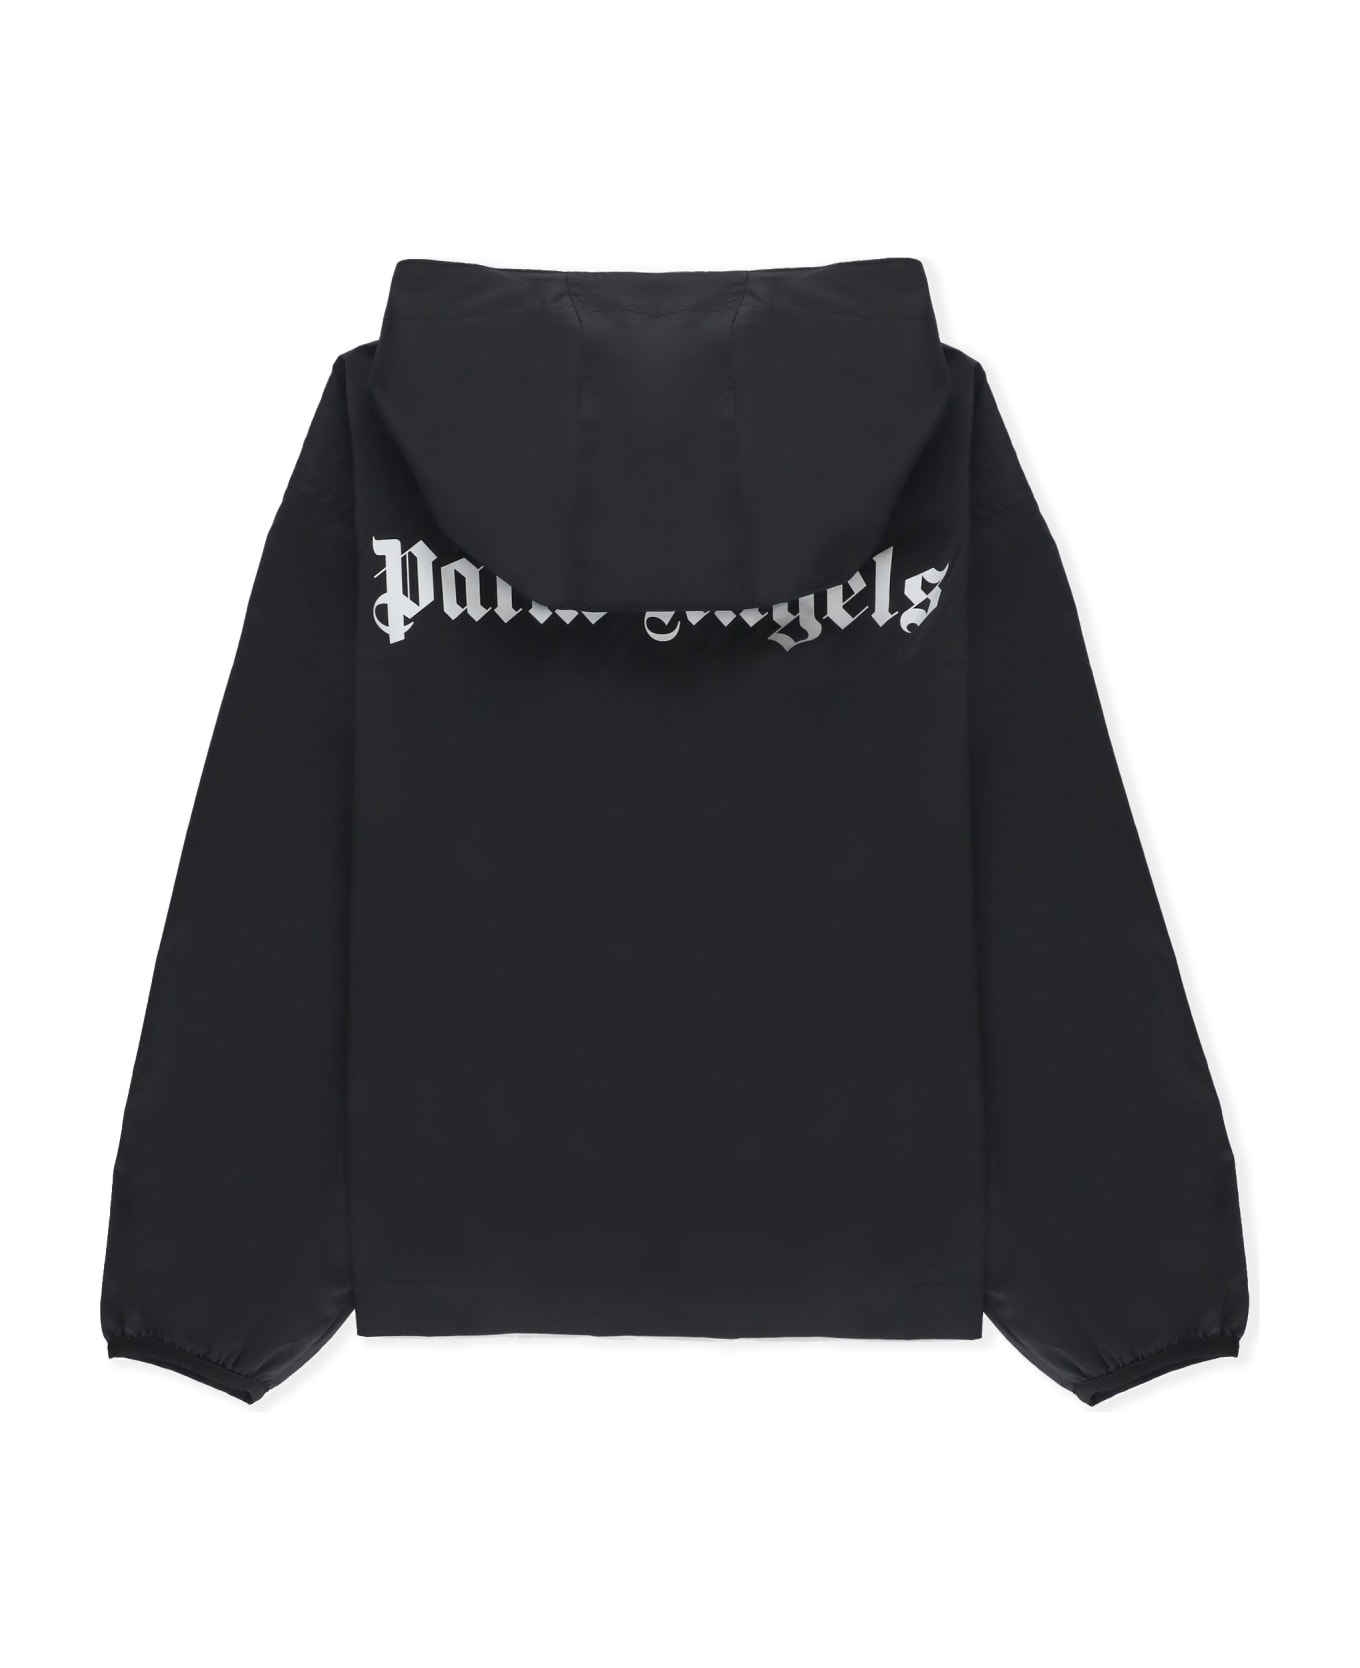 Palm Angels Jacket With Logo - Black コート＆ジャケット